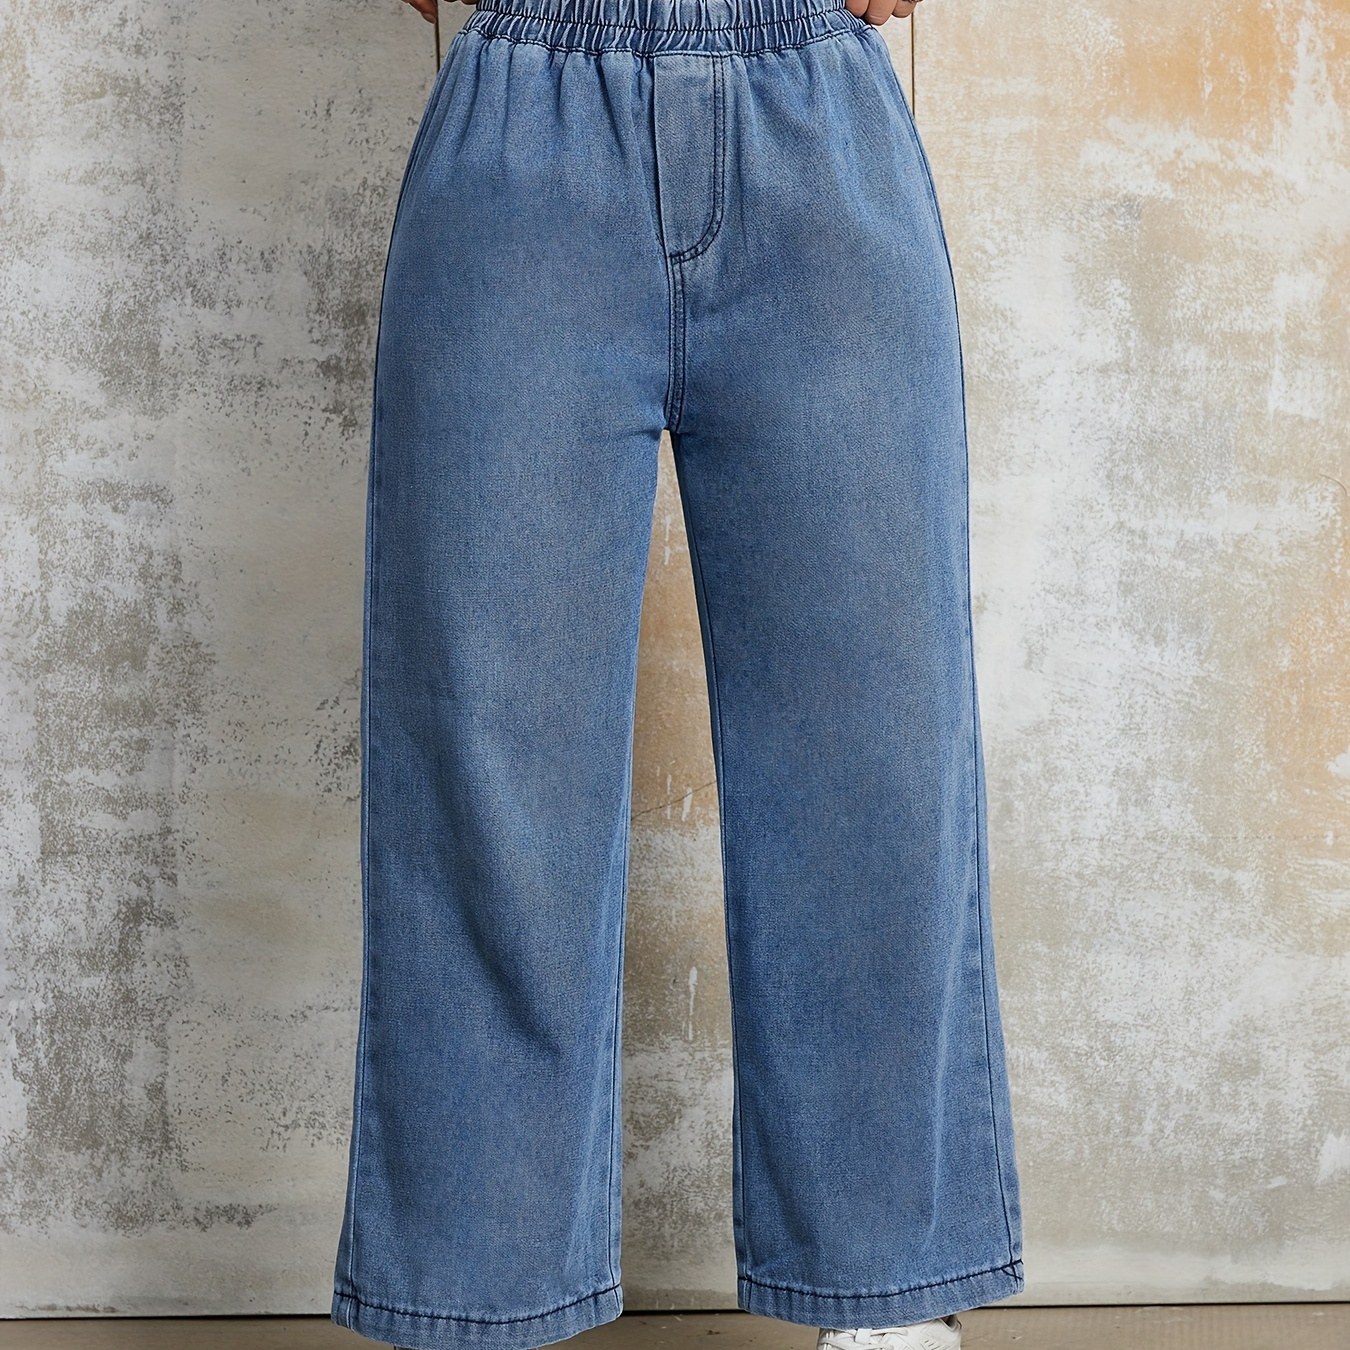 

Elastic Waist Loose Fit Denim Pants, Plain Washed Blue Wide Leg Jeans, Women's Denim Jeans & Clothing For Fall